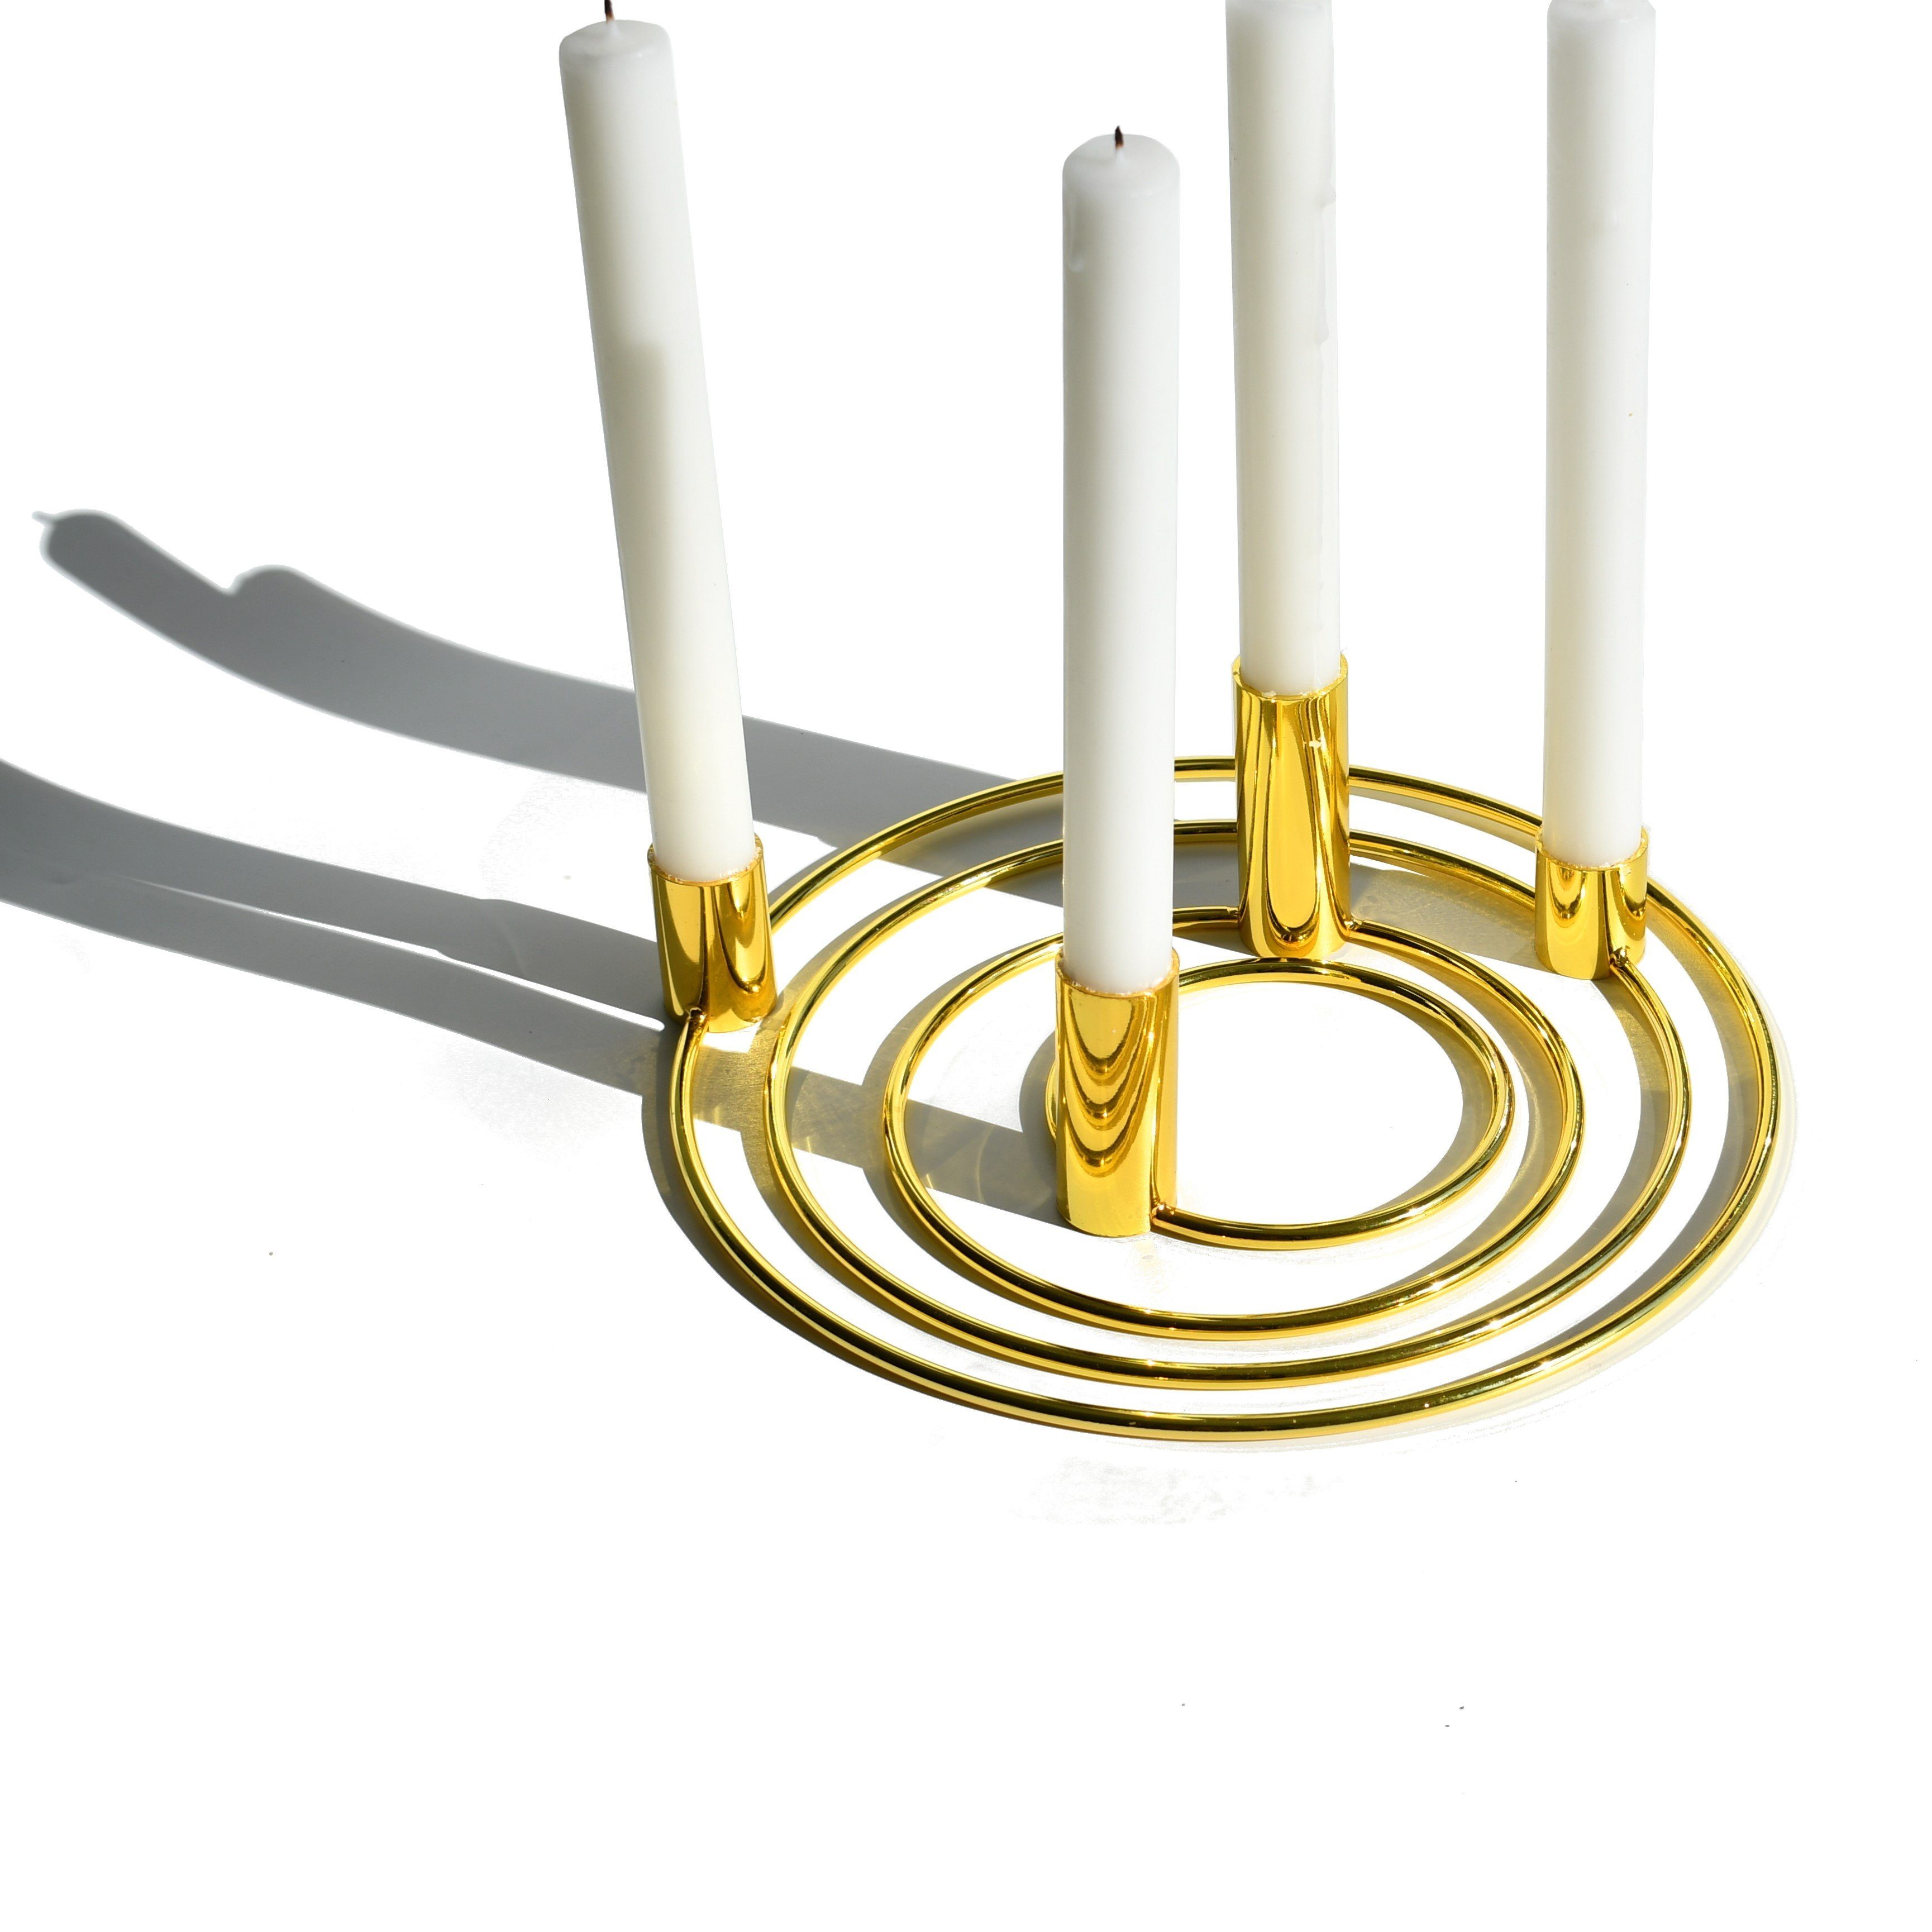 Blue Chilli Design Kerzenhalter Kerzenhalter in Gold, vier verschiedene elegante Kreise (4 St), Goldfarben, Edelstahl, poliert, inkl. 4x Kerzen